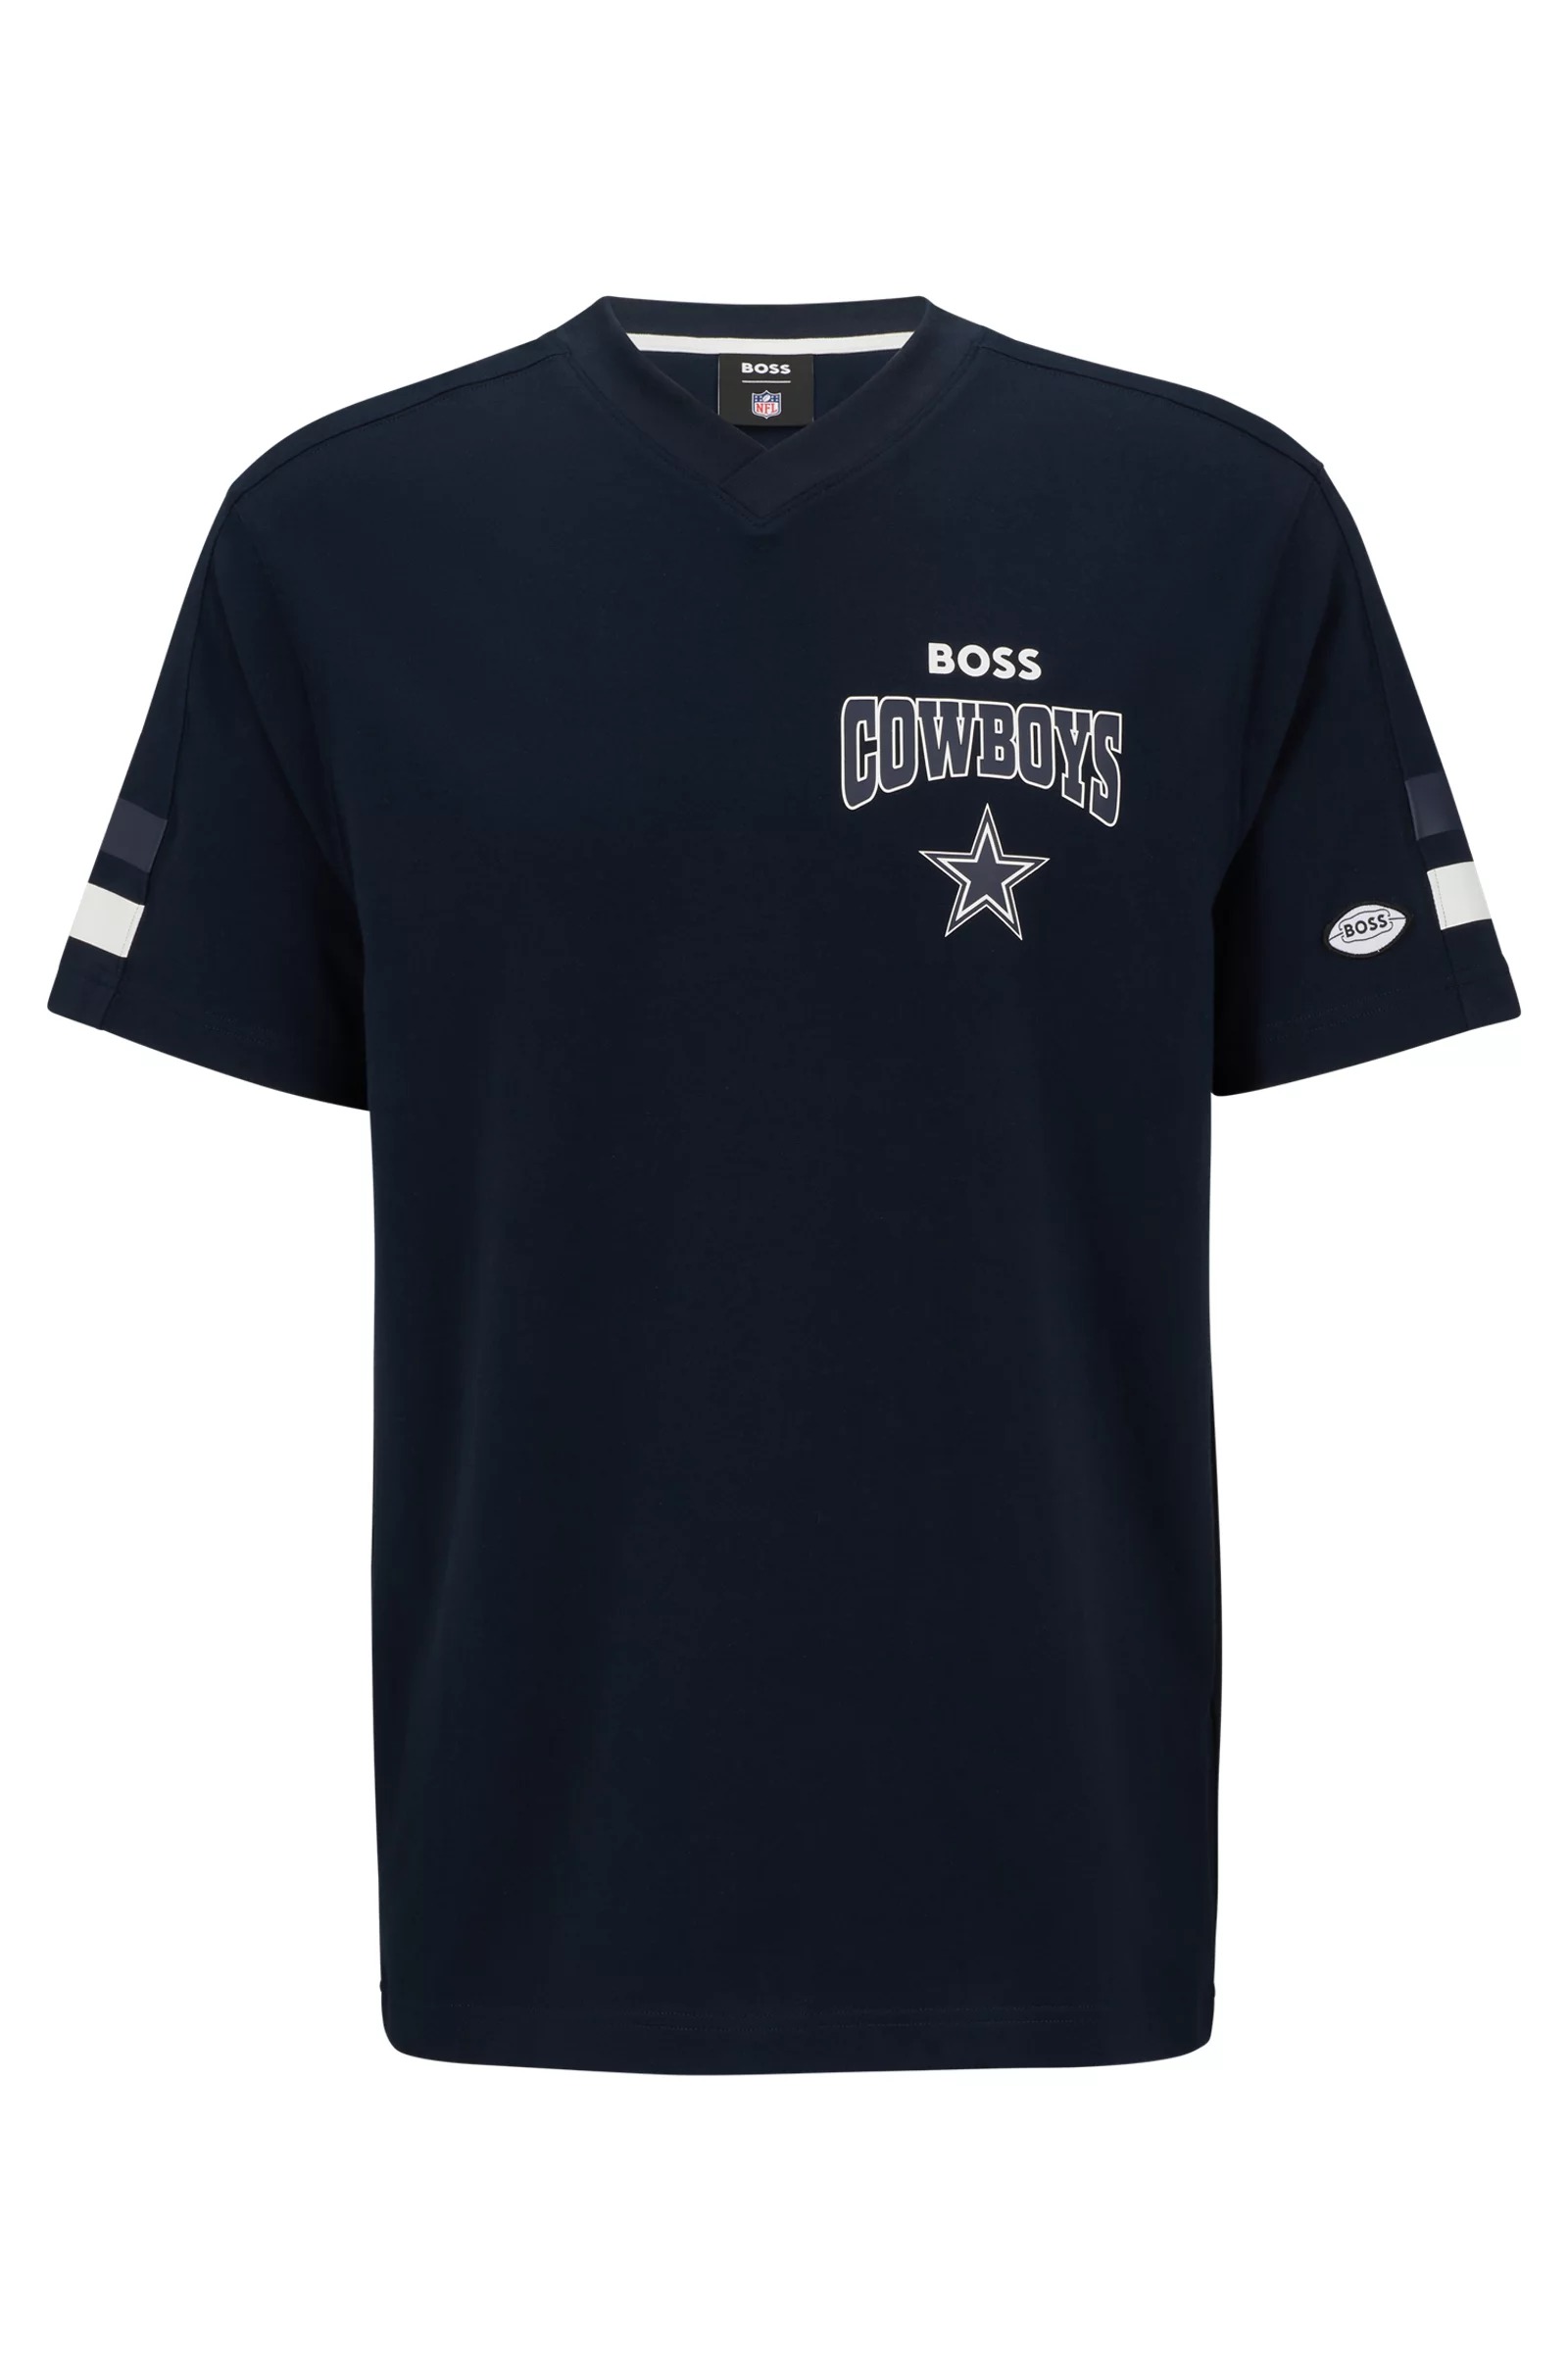 Футболка Boss X Nfl Cotton-blend With Collaborative Branding Cowboys, темно-синий розовая футболка свободного кроя с логотипом boss orange tchup